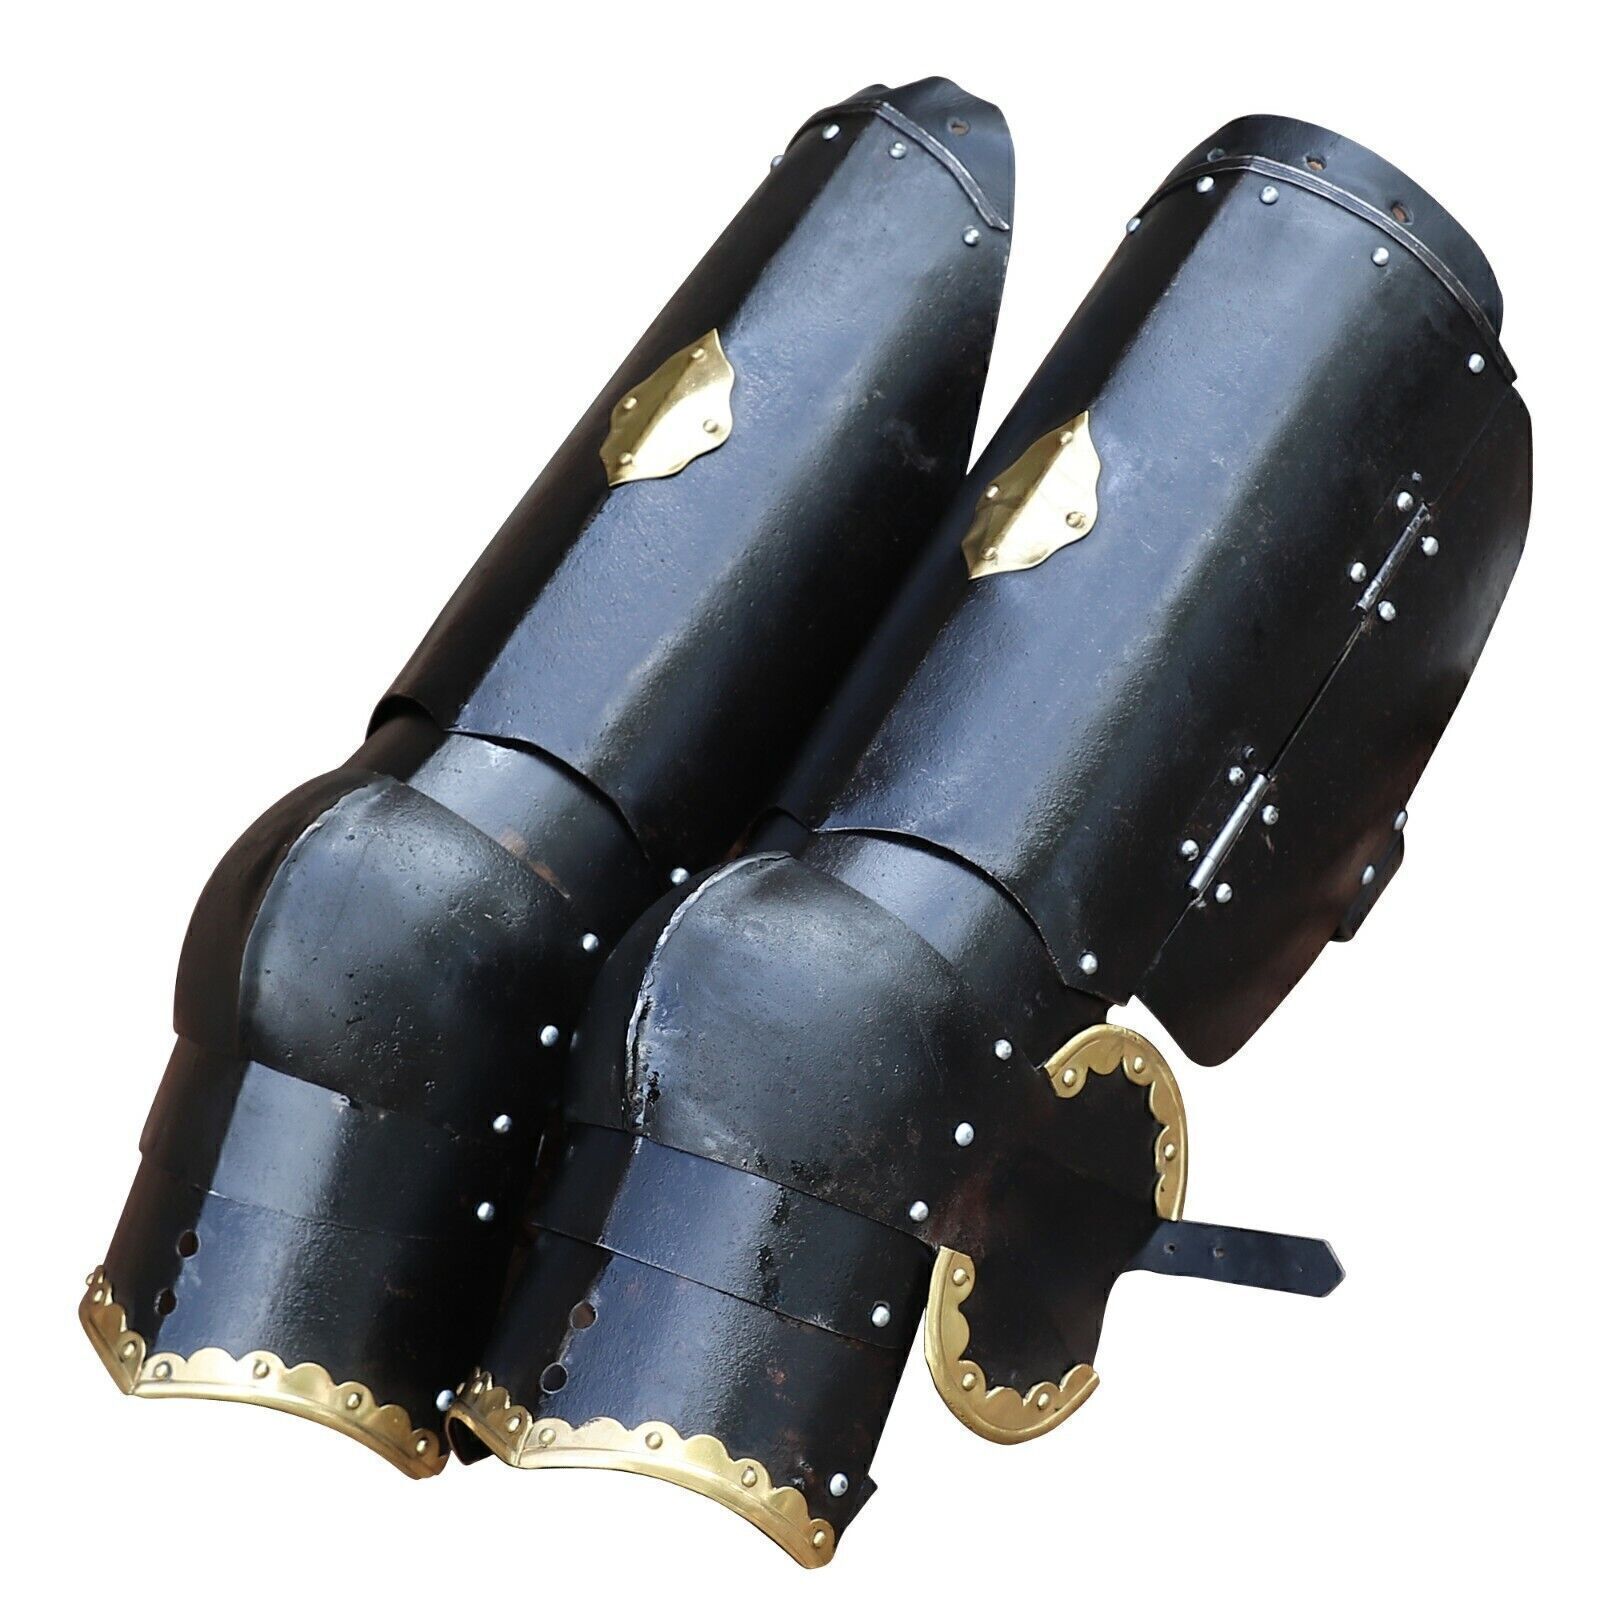 The Cursed Black Knight Functional Steel Practice Training Medieval Leg Armor